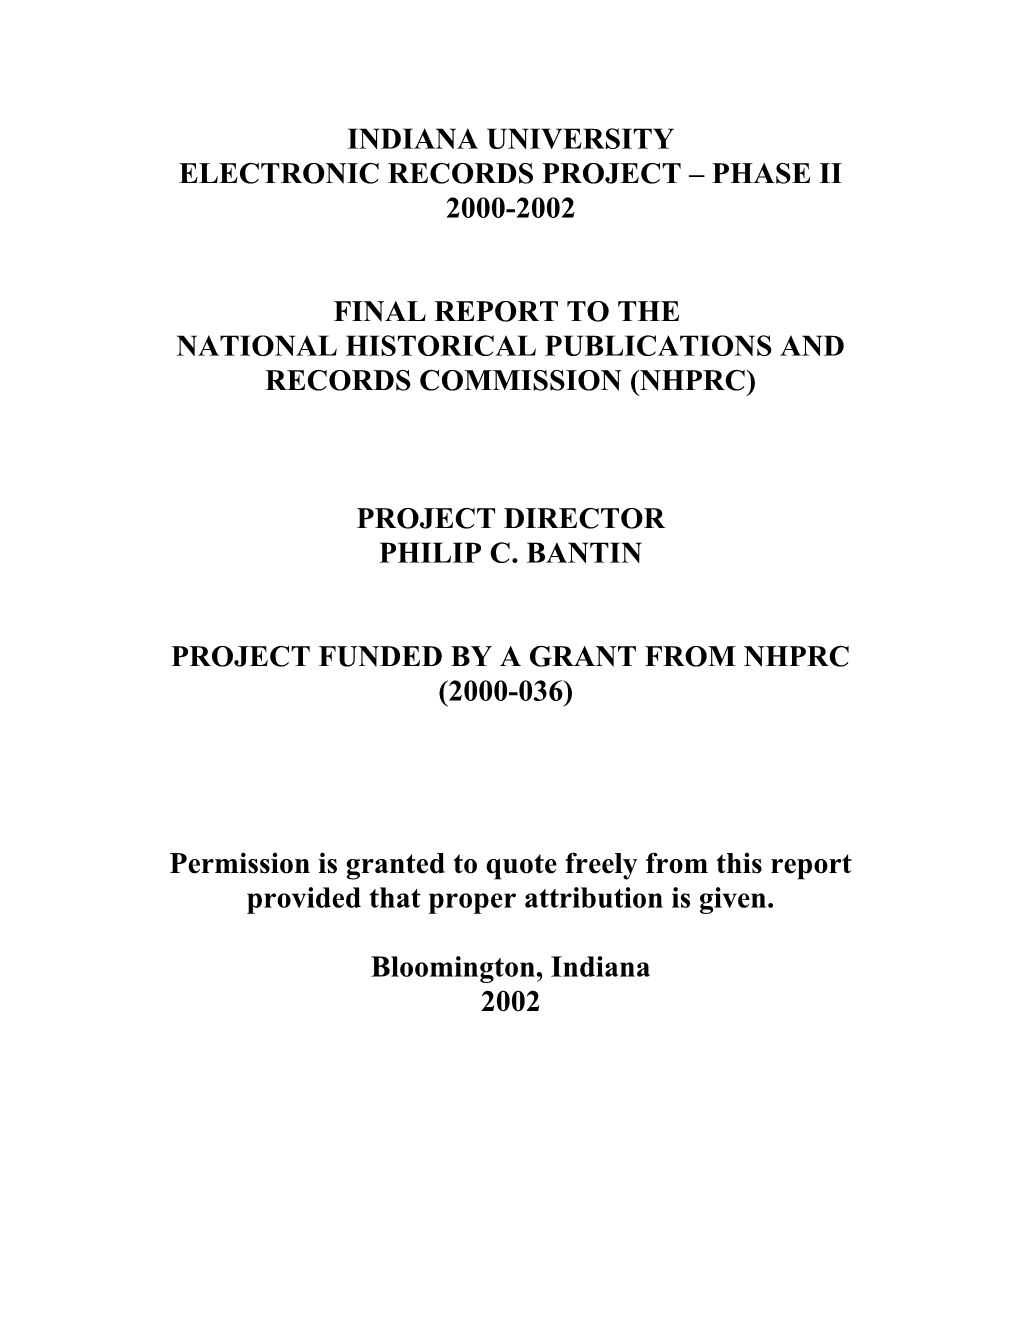 NHPRC Final Report